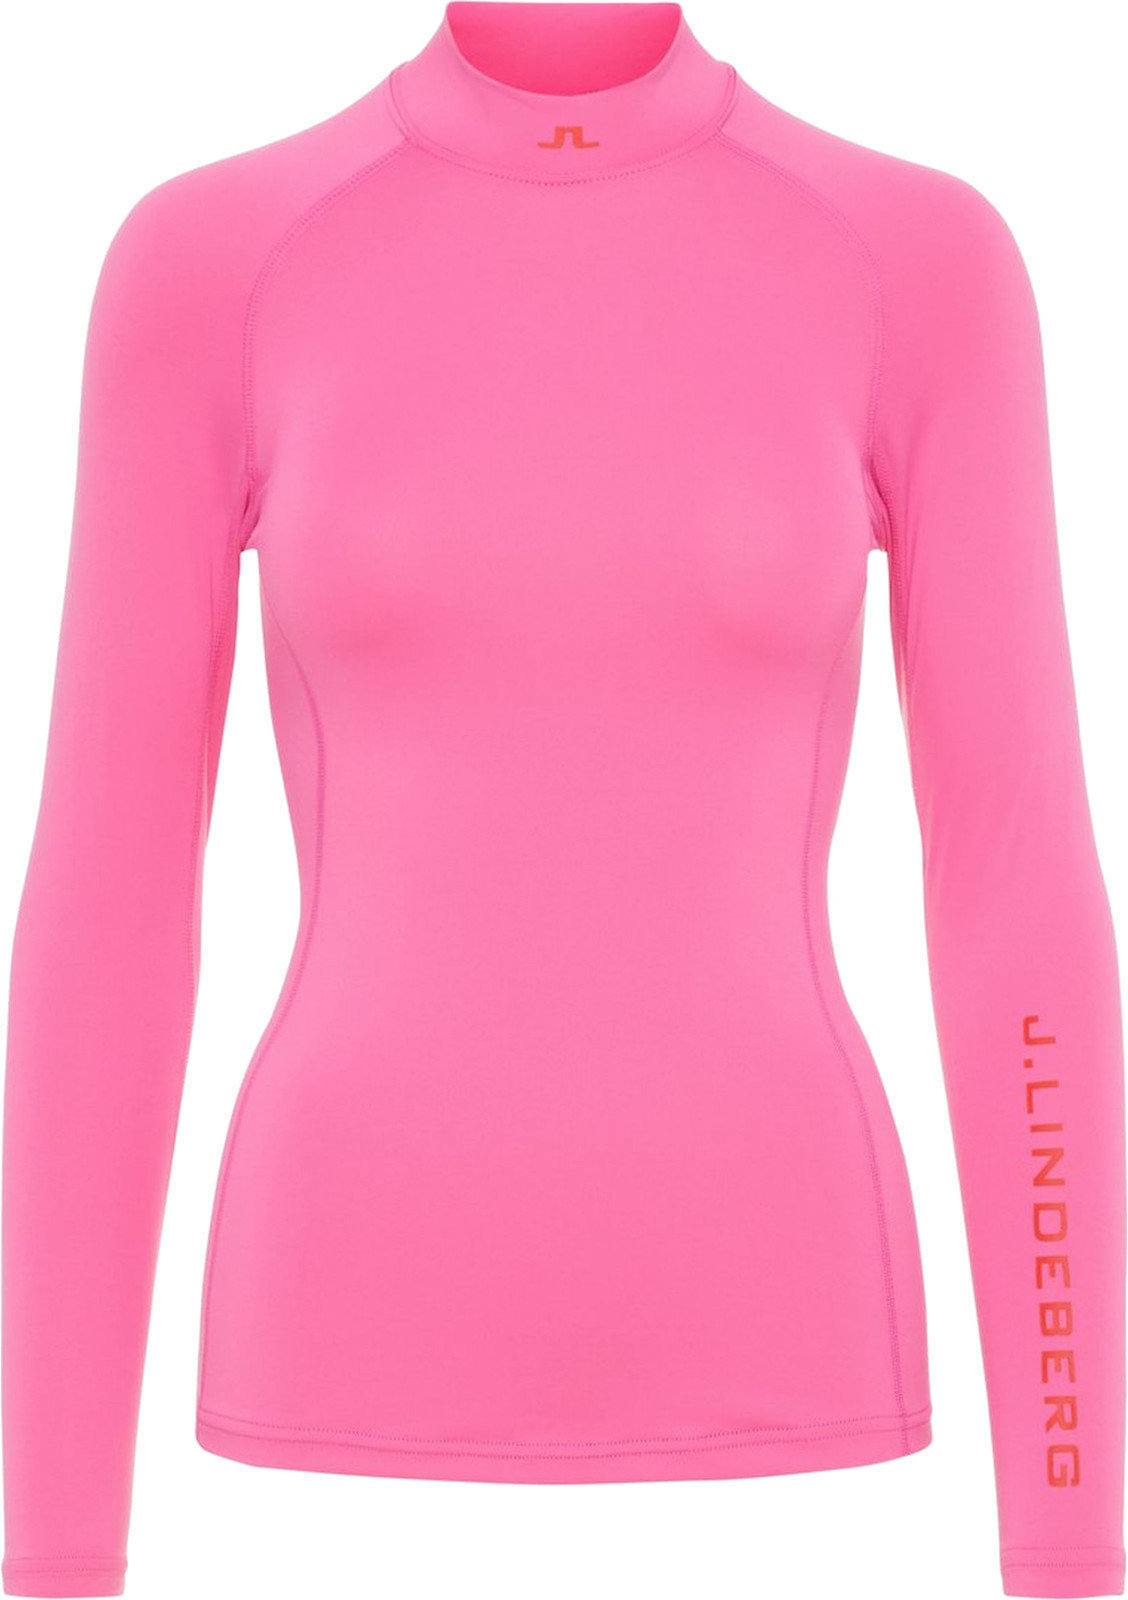 Vêtements thermiques J.Lindeberg Asa Soft Compression Womens Base Layer Pop Pink M